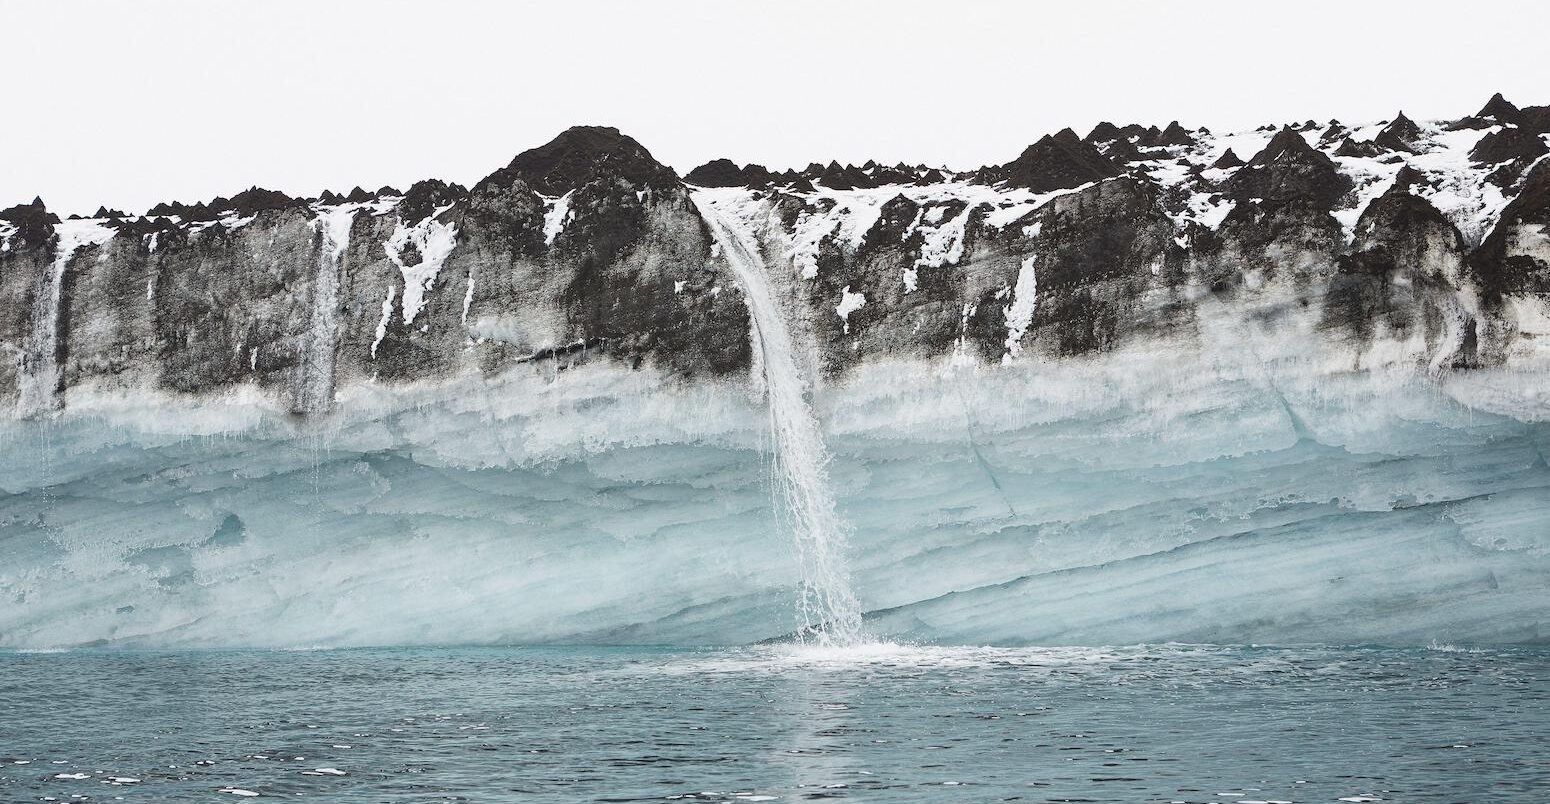 Snowmelt waterfall pouring over cliffs into ocean, Antarctic Peninsula, Weddell Sea, Antarctica.